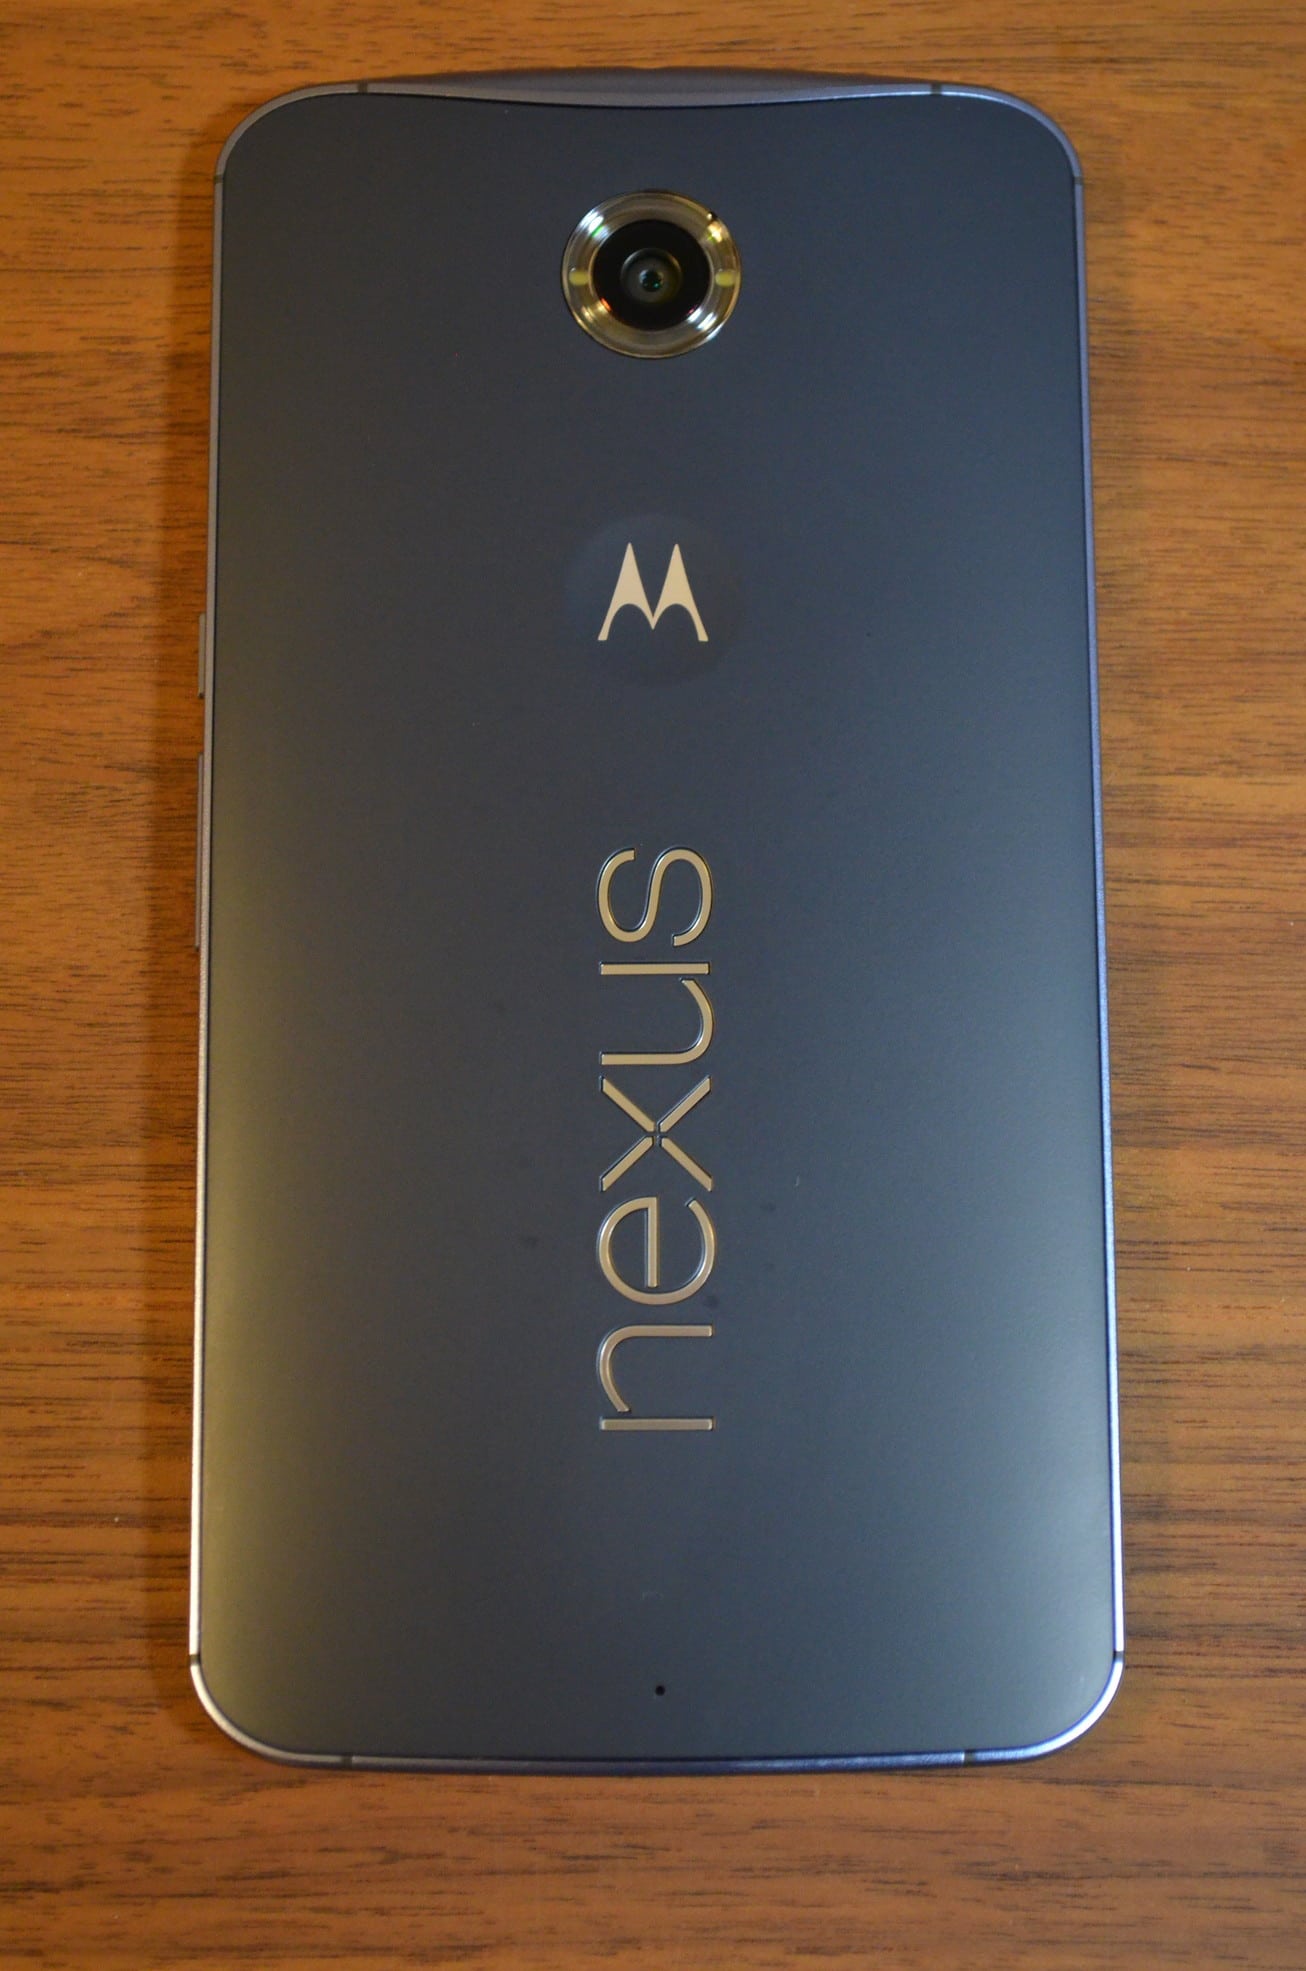 Nexus6(ネクサス6) SIMフリー購入レビューと使い方まとめ 